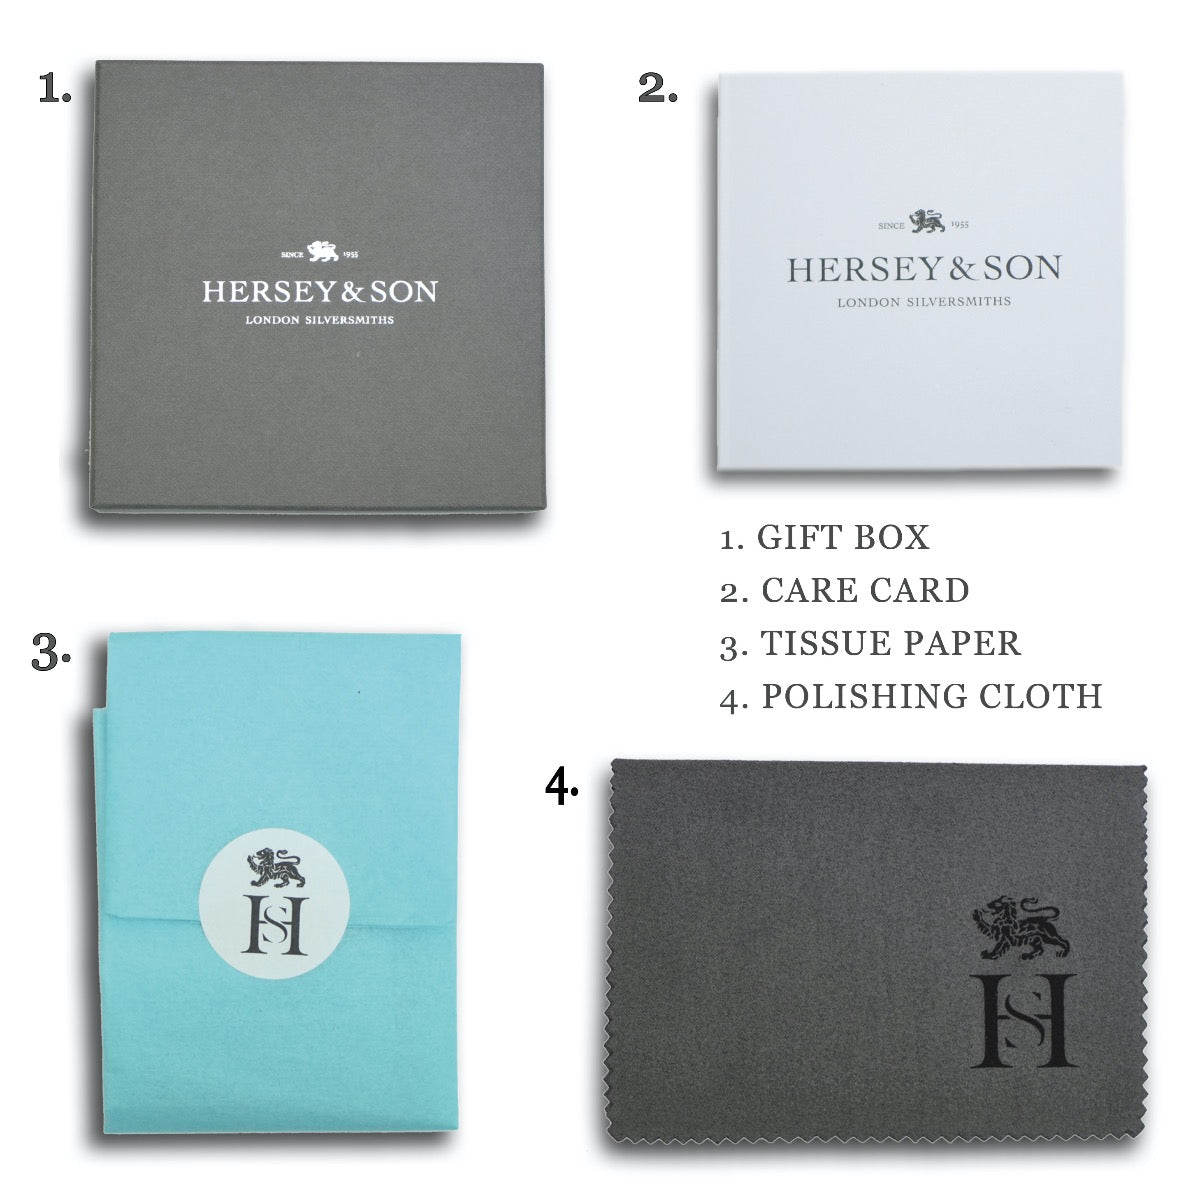 Hersey & Son Silversmiths packaging silver Napkin hook 